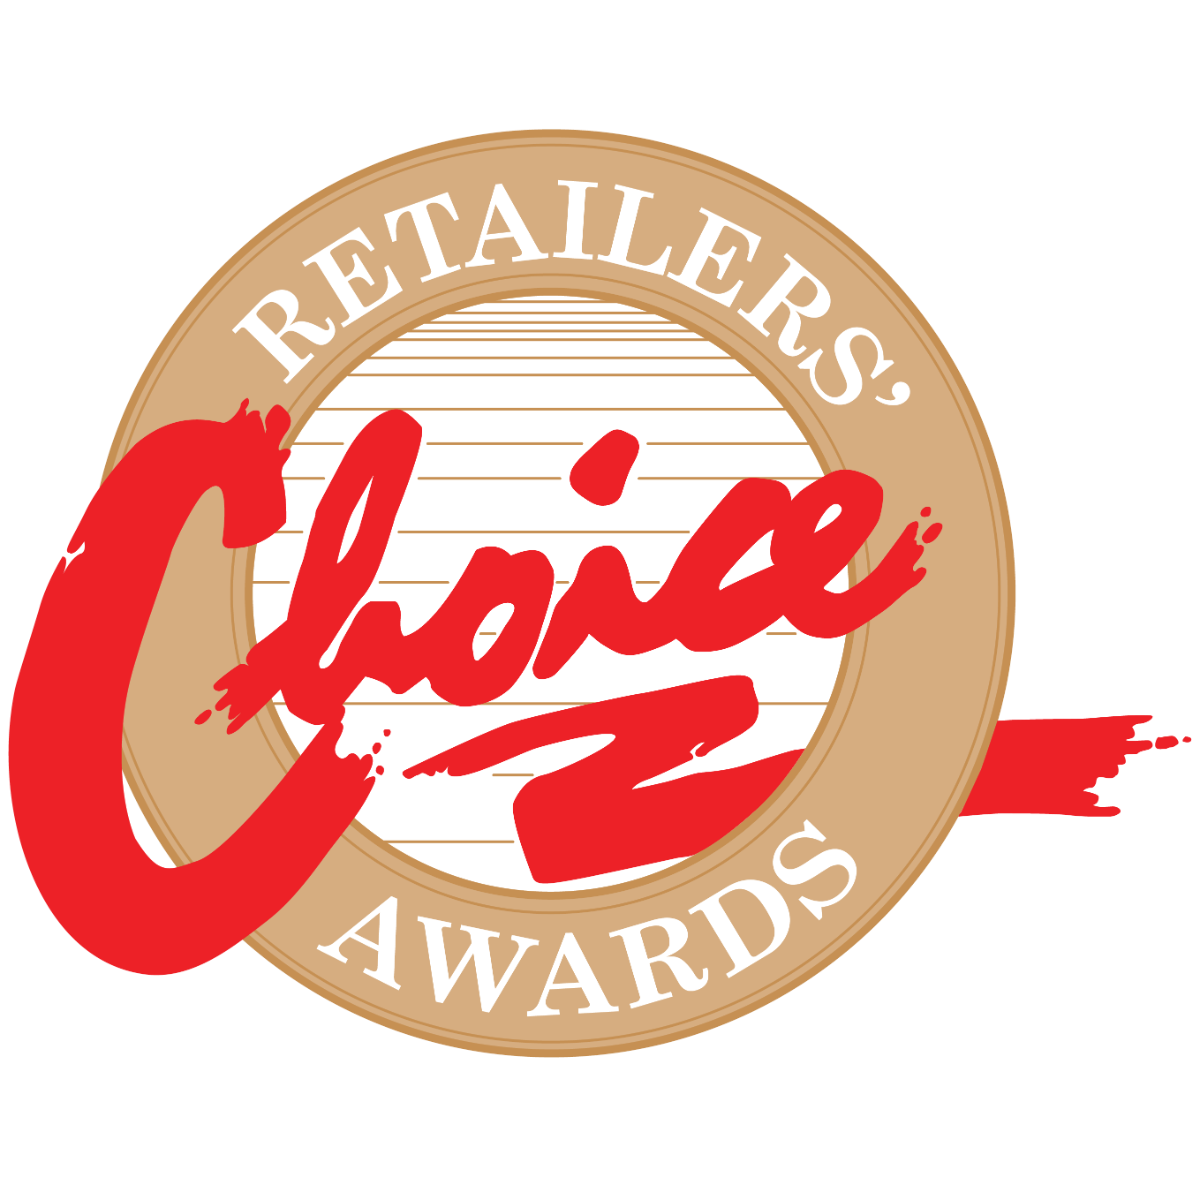 retailers-choice-awards-logo-01-01